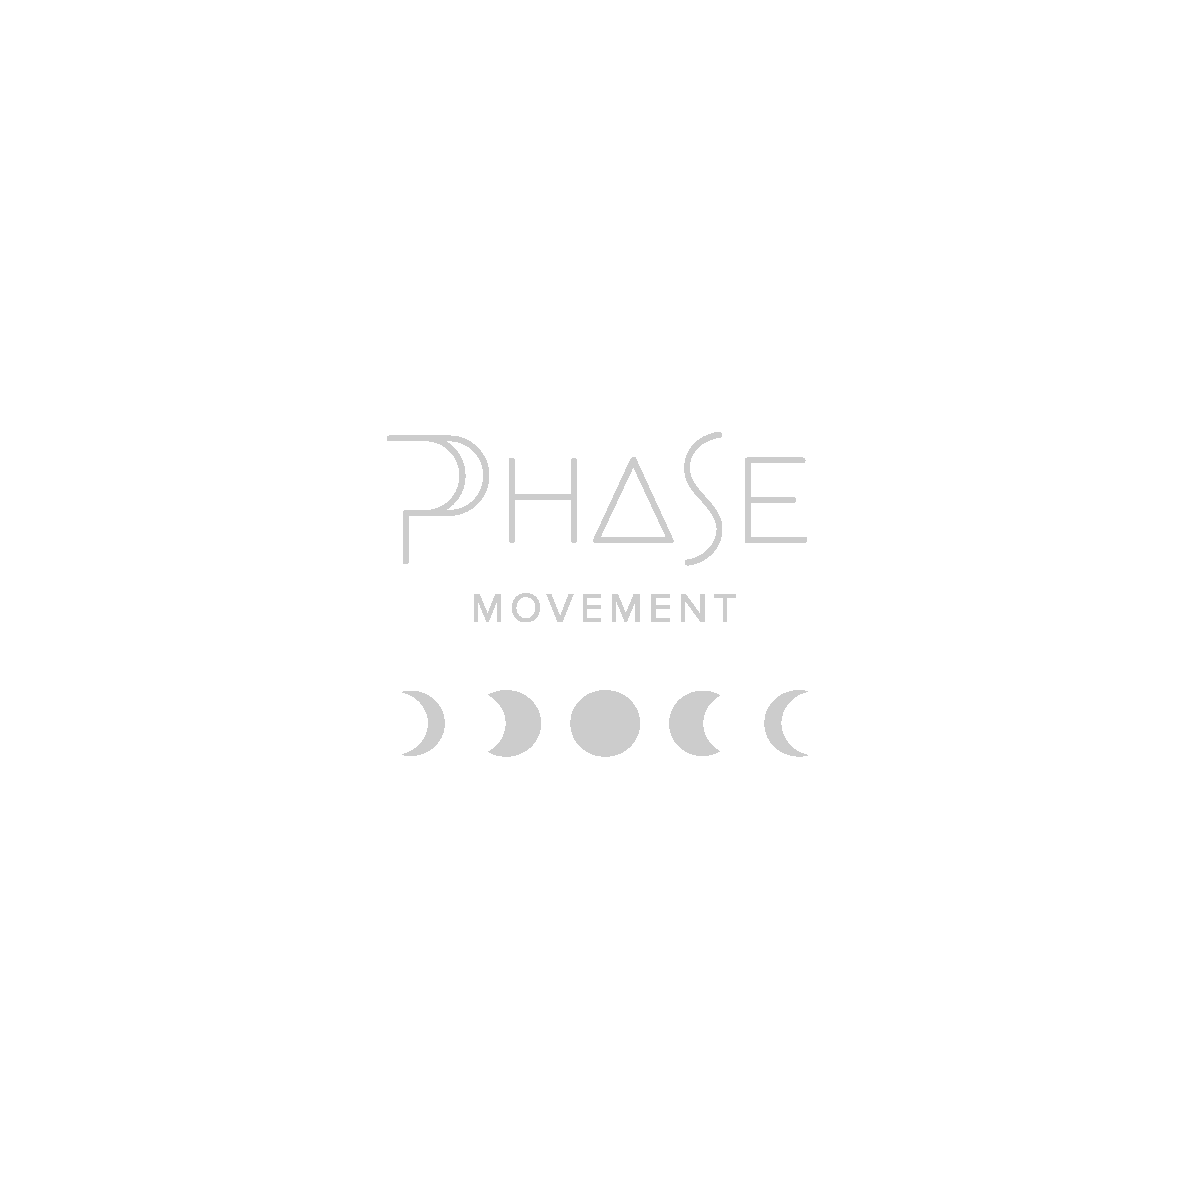 Phase Movement